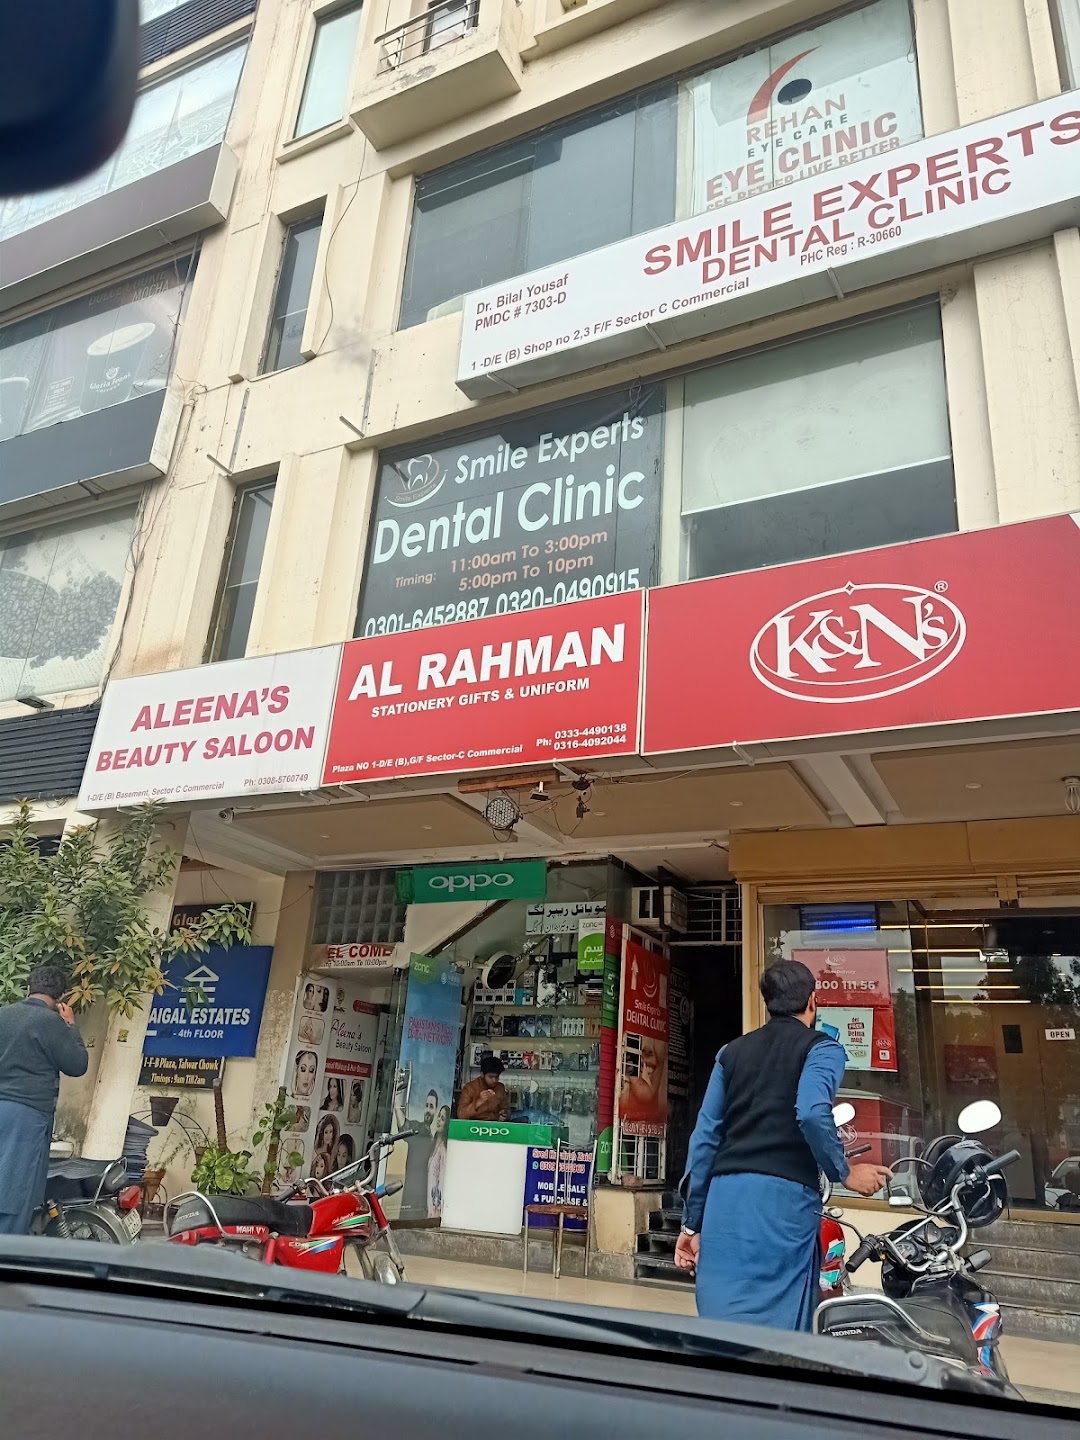 Al Rahman stationary gift and uniform shop